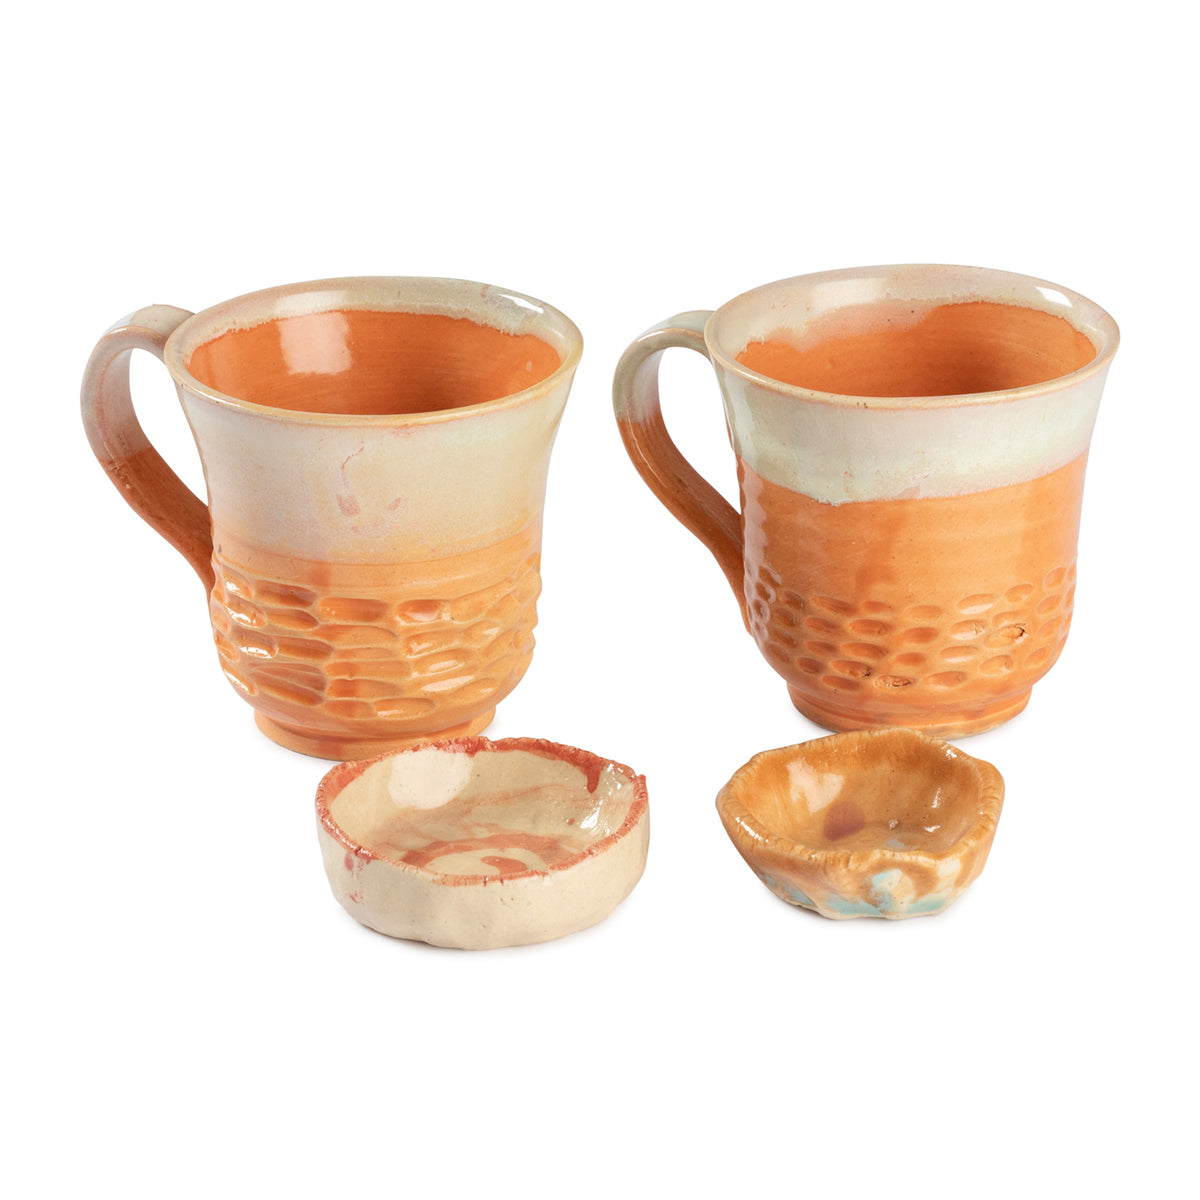 Stoneware Ceramic Mugs - Set of 2 - 3x3